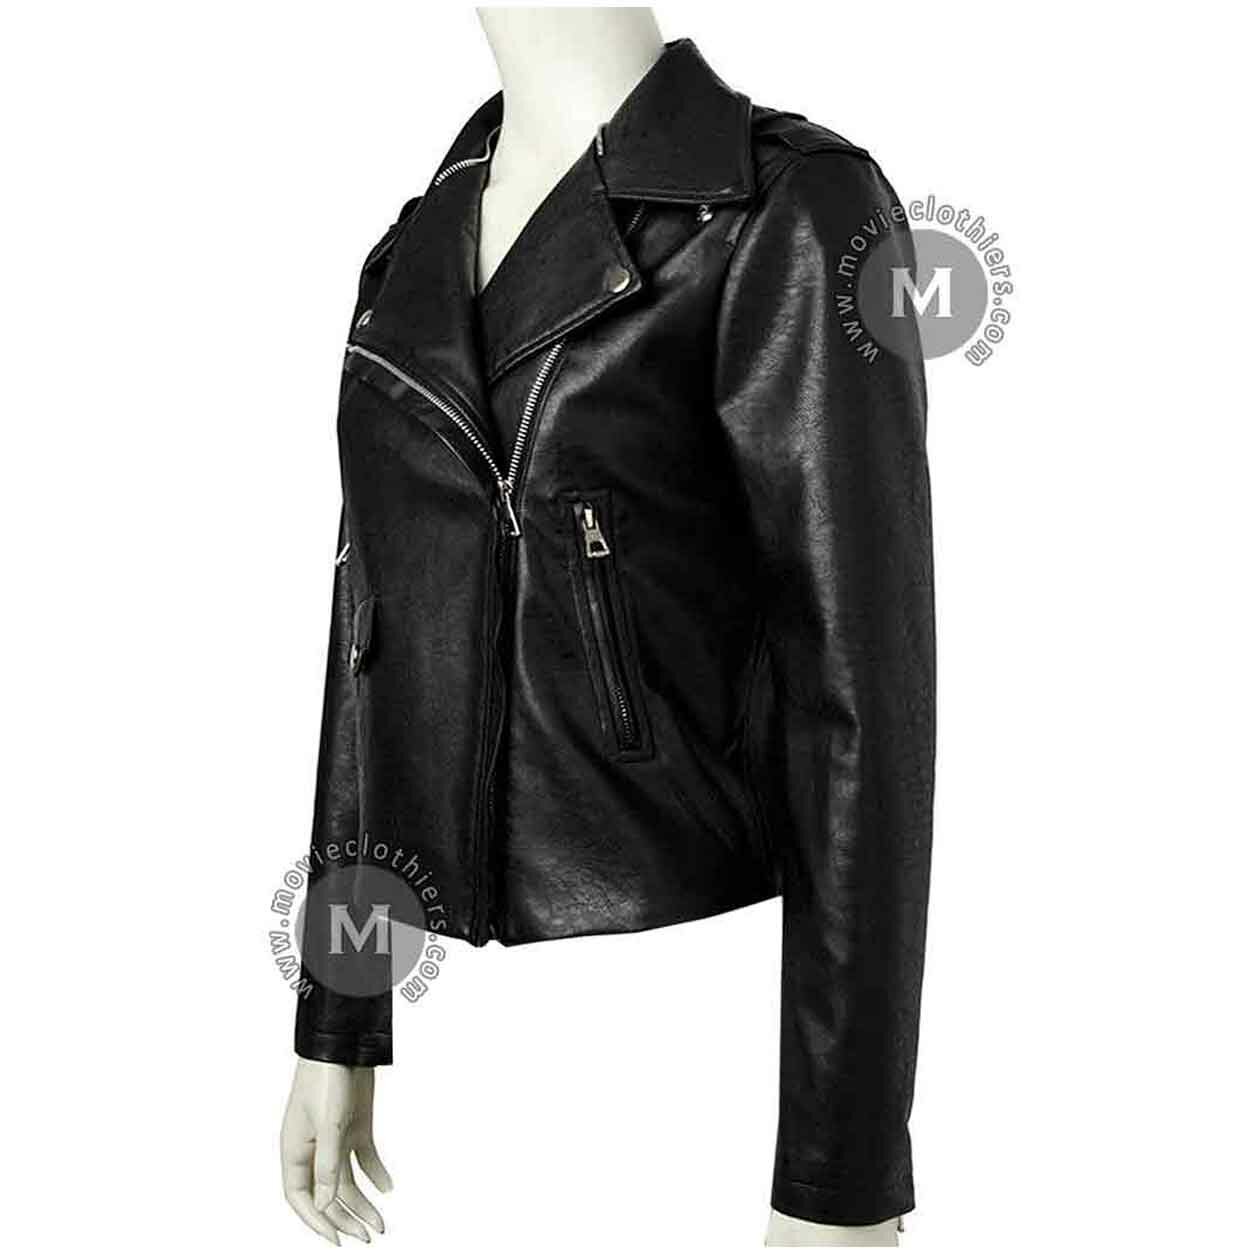 Jessica Jones Leather Jacket